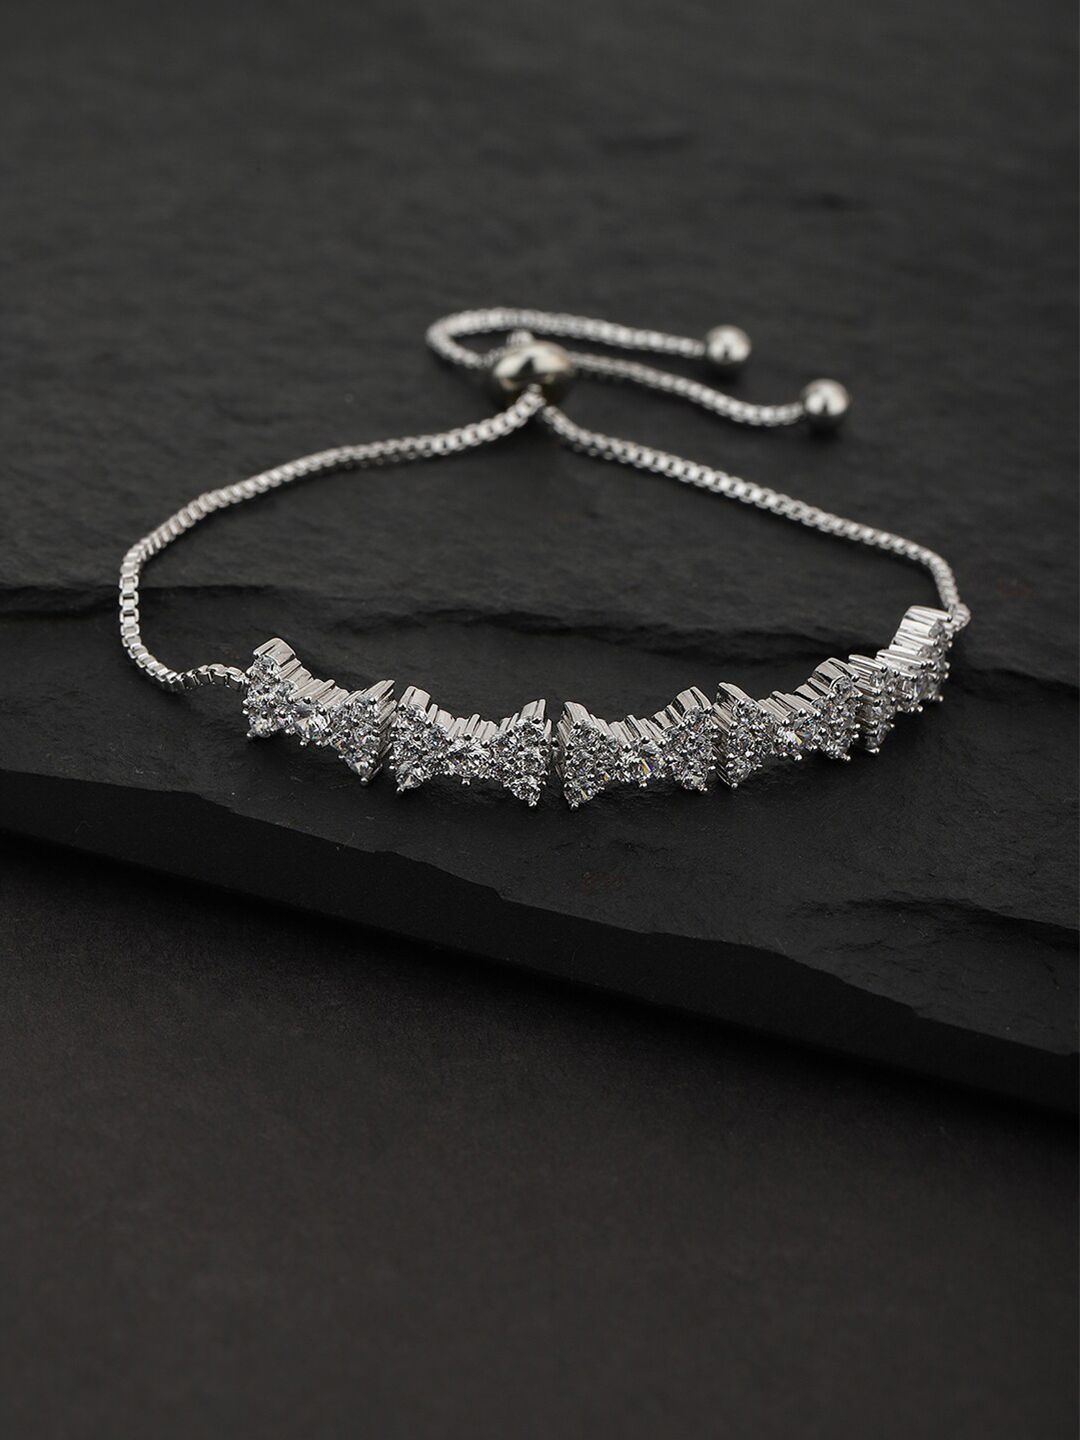 Carlton London Women Silver-Toned Rhodium-Plated Charm Bracelet Price in India